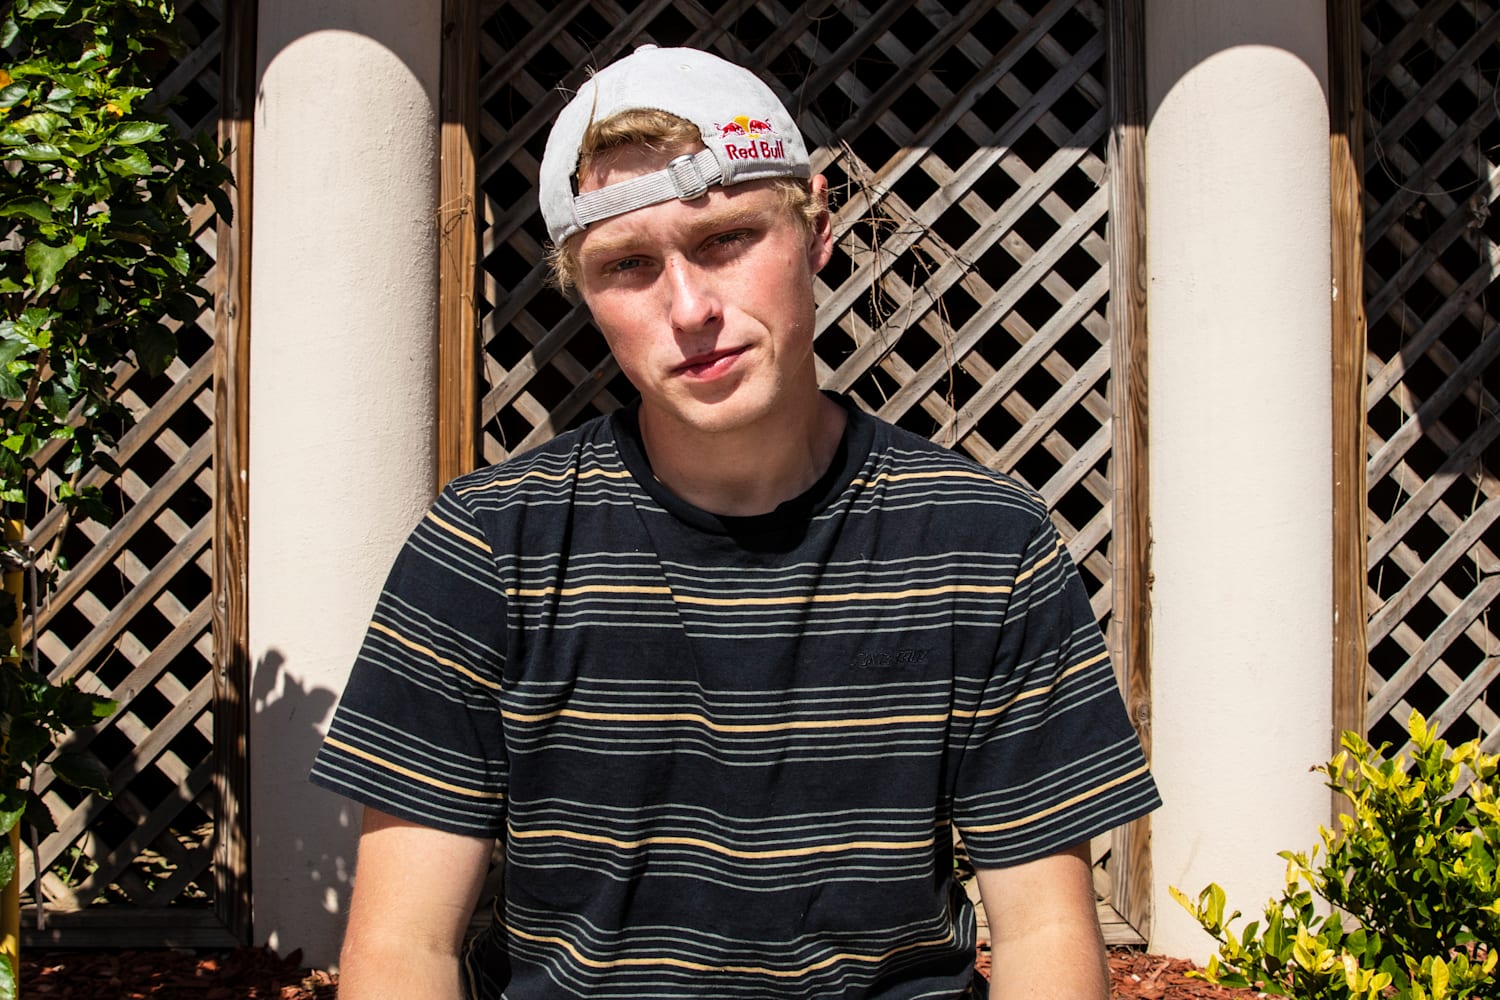 Jake Wooten: Skateboarding – Red Bull athlete profile